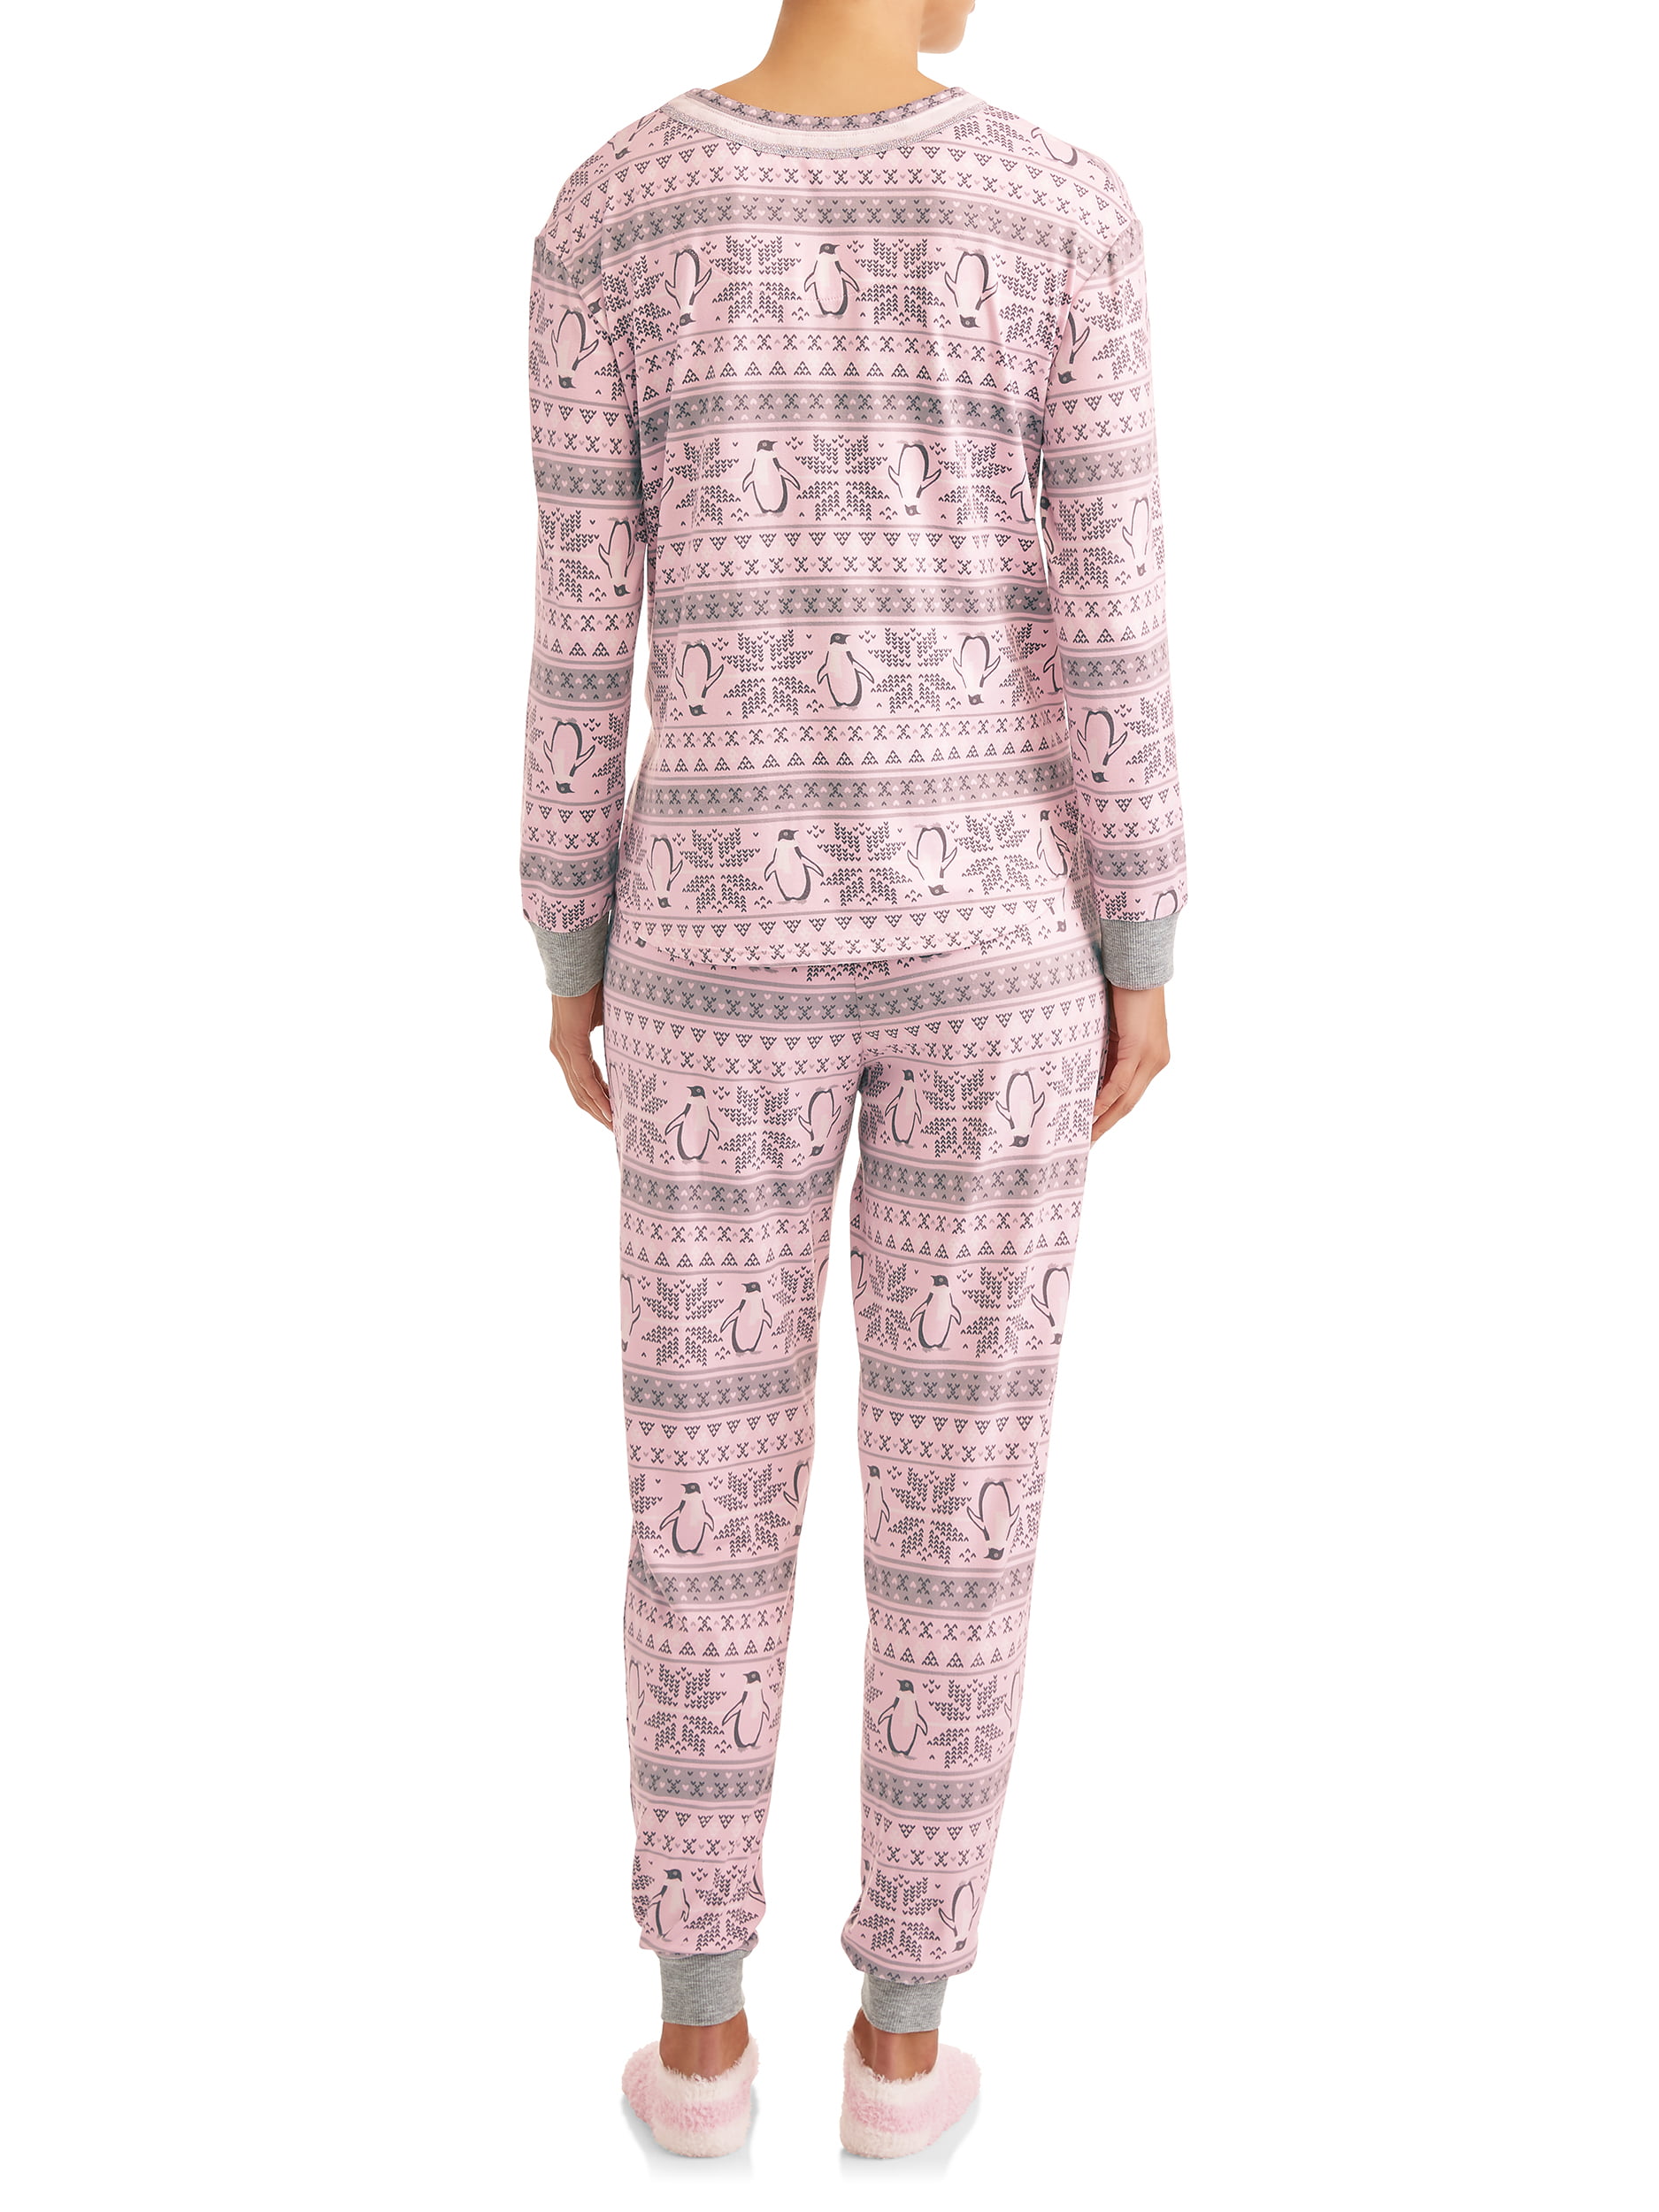 Ladies Fleece Pyjamas Nightwear Print Pjs Loungewear Pink Long Sleeve Size 8-18